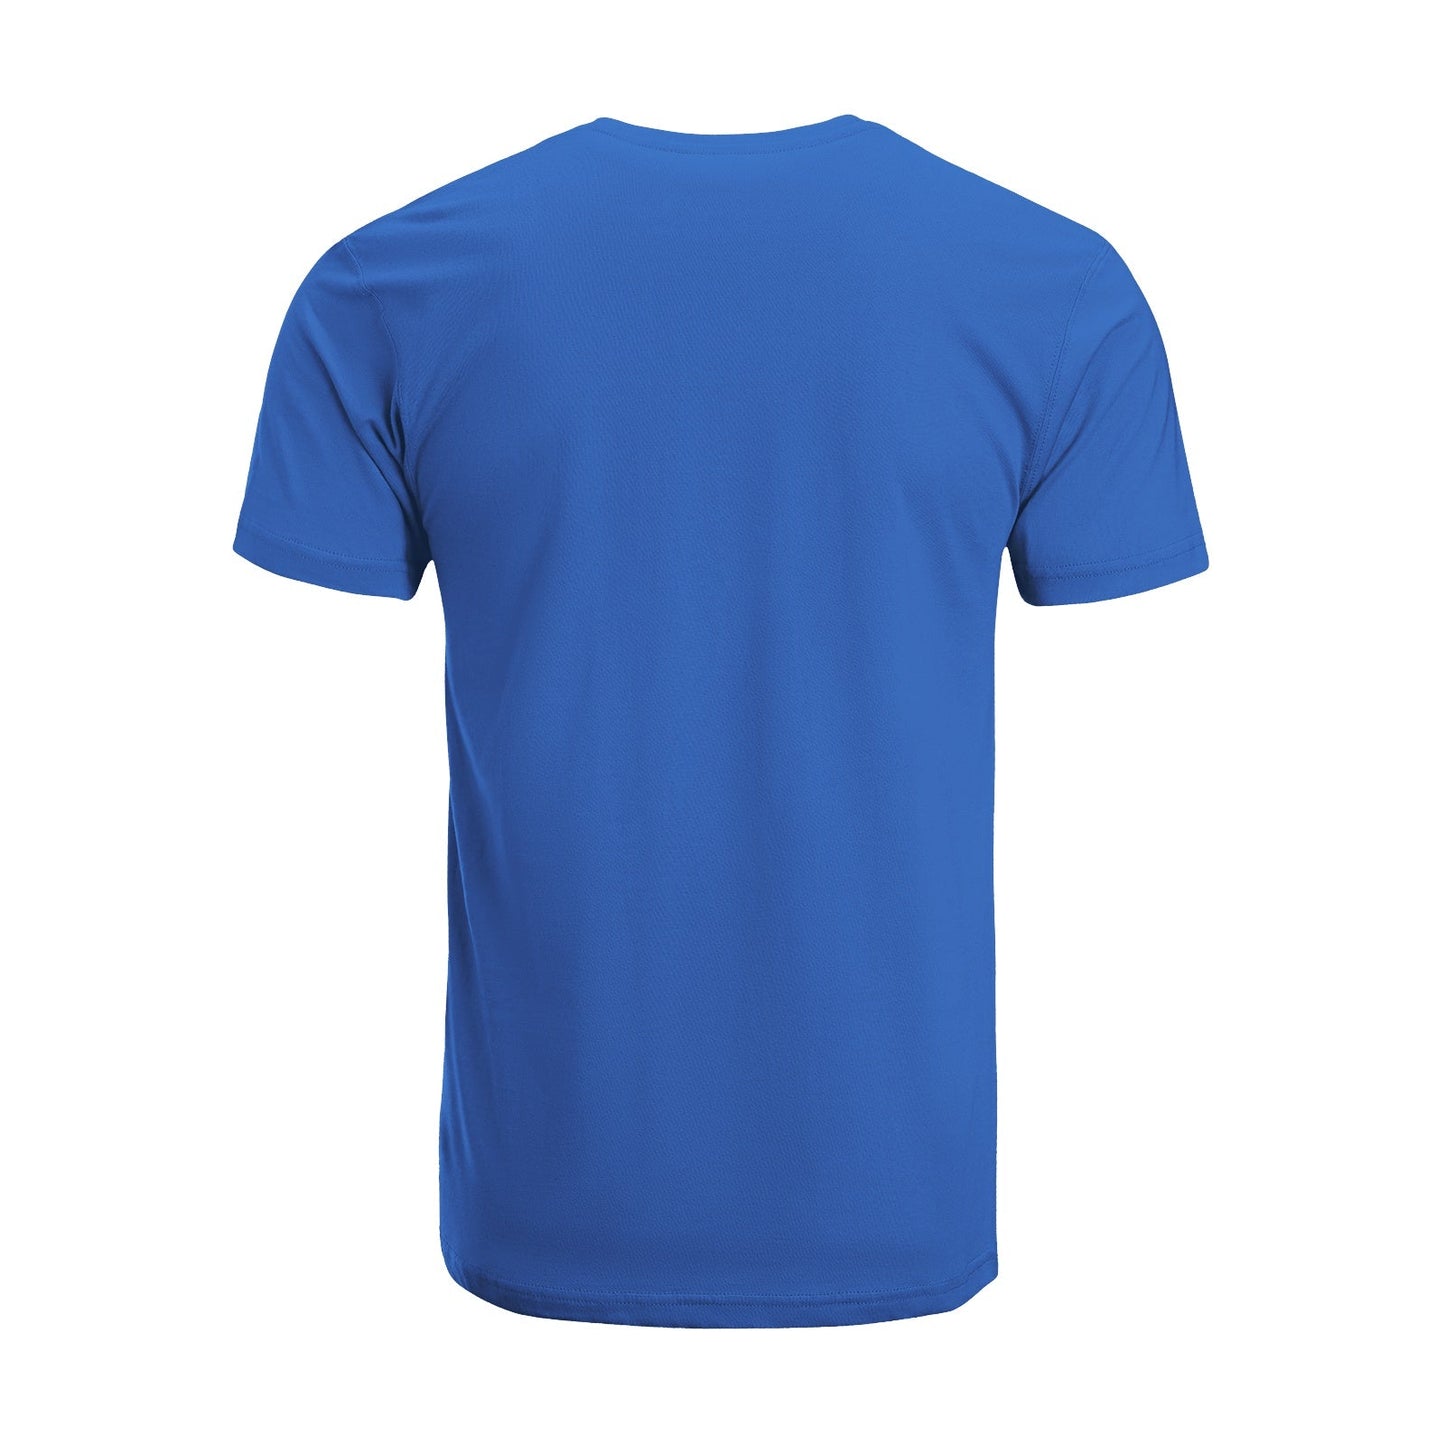 Unisex Short Sleeve Crew Neck Cotton Jersey T-Shirt MOM 49